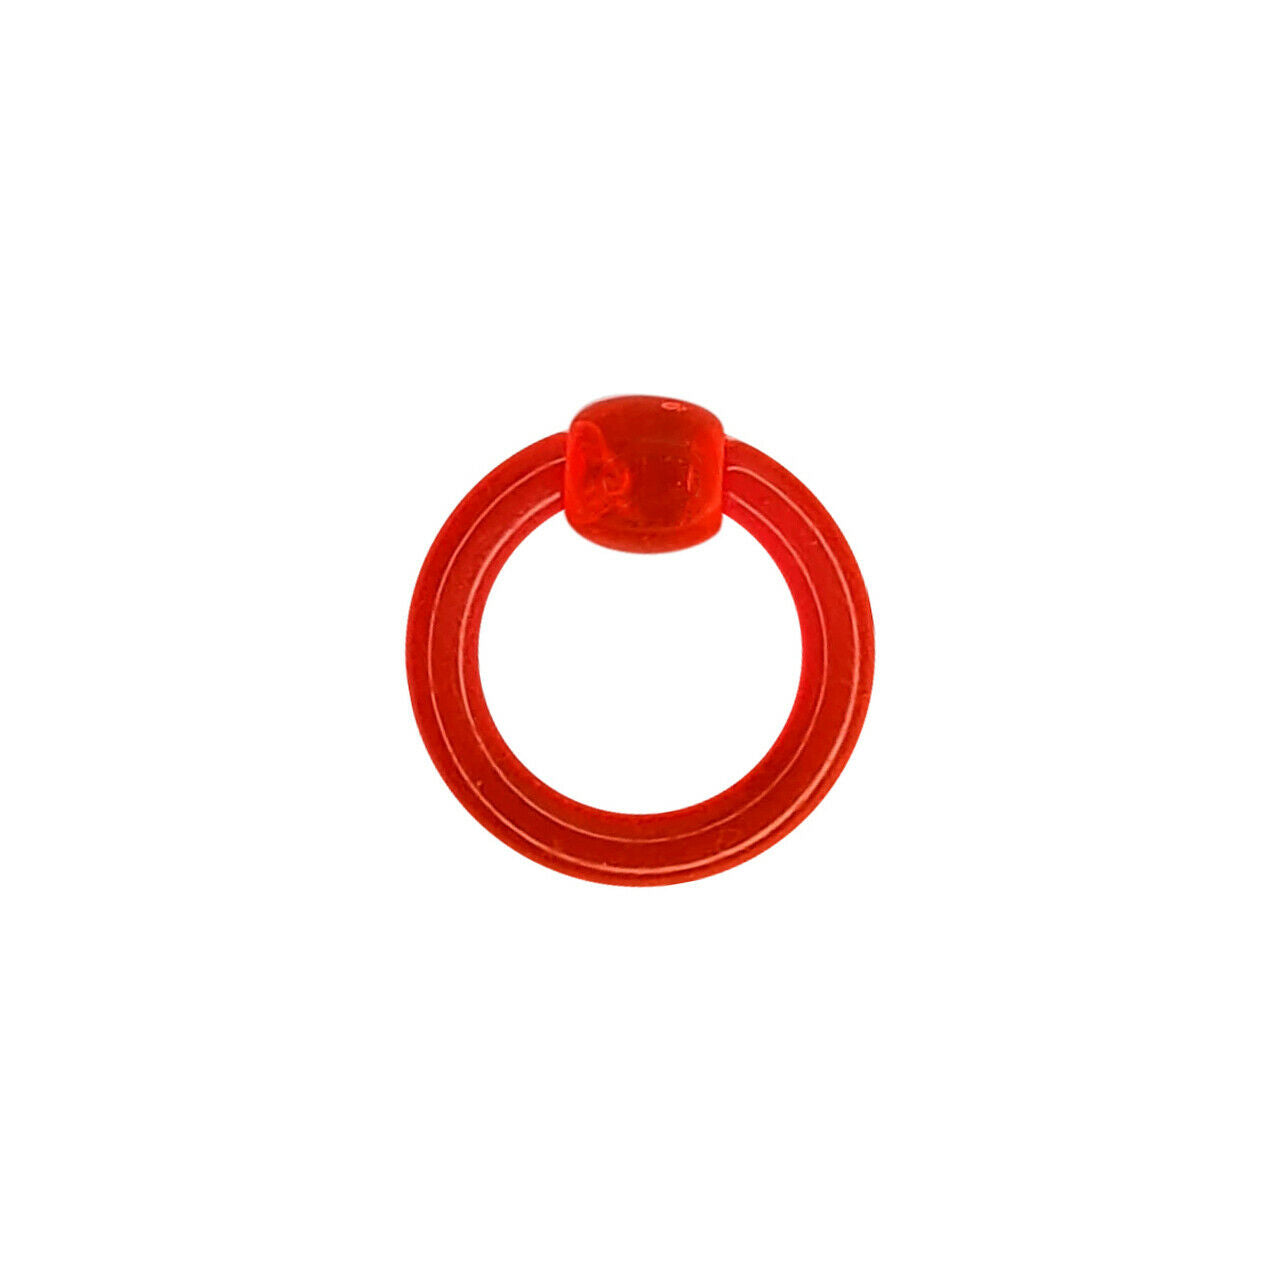 UV Neon Acrylic Circular Captive Bead Ring 10g - Sold as a Pair